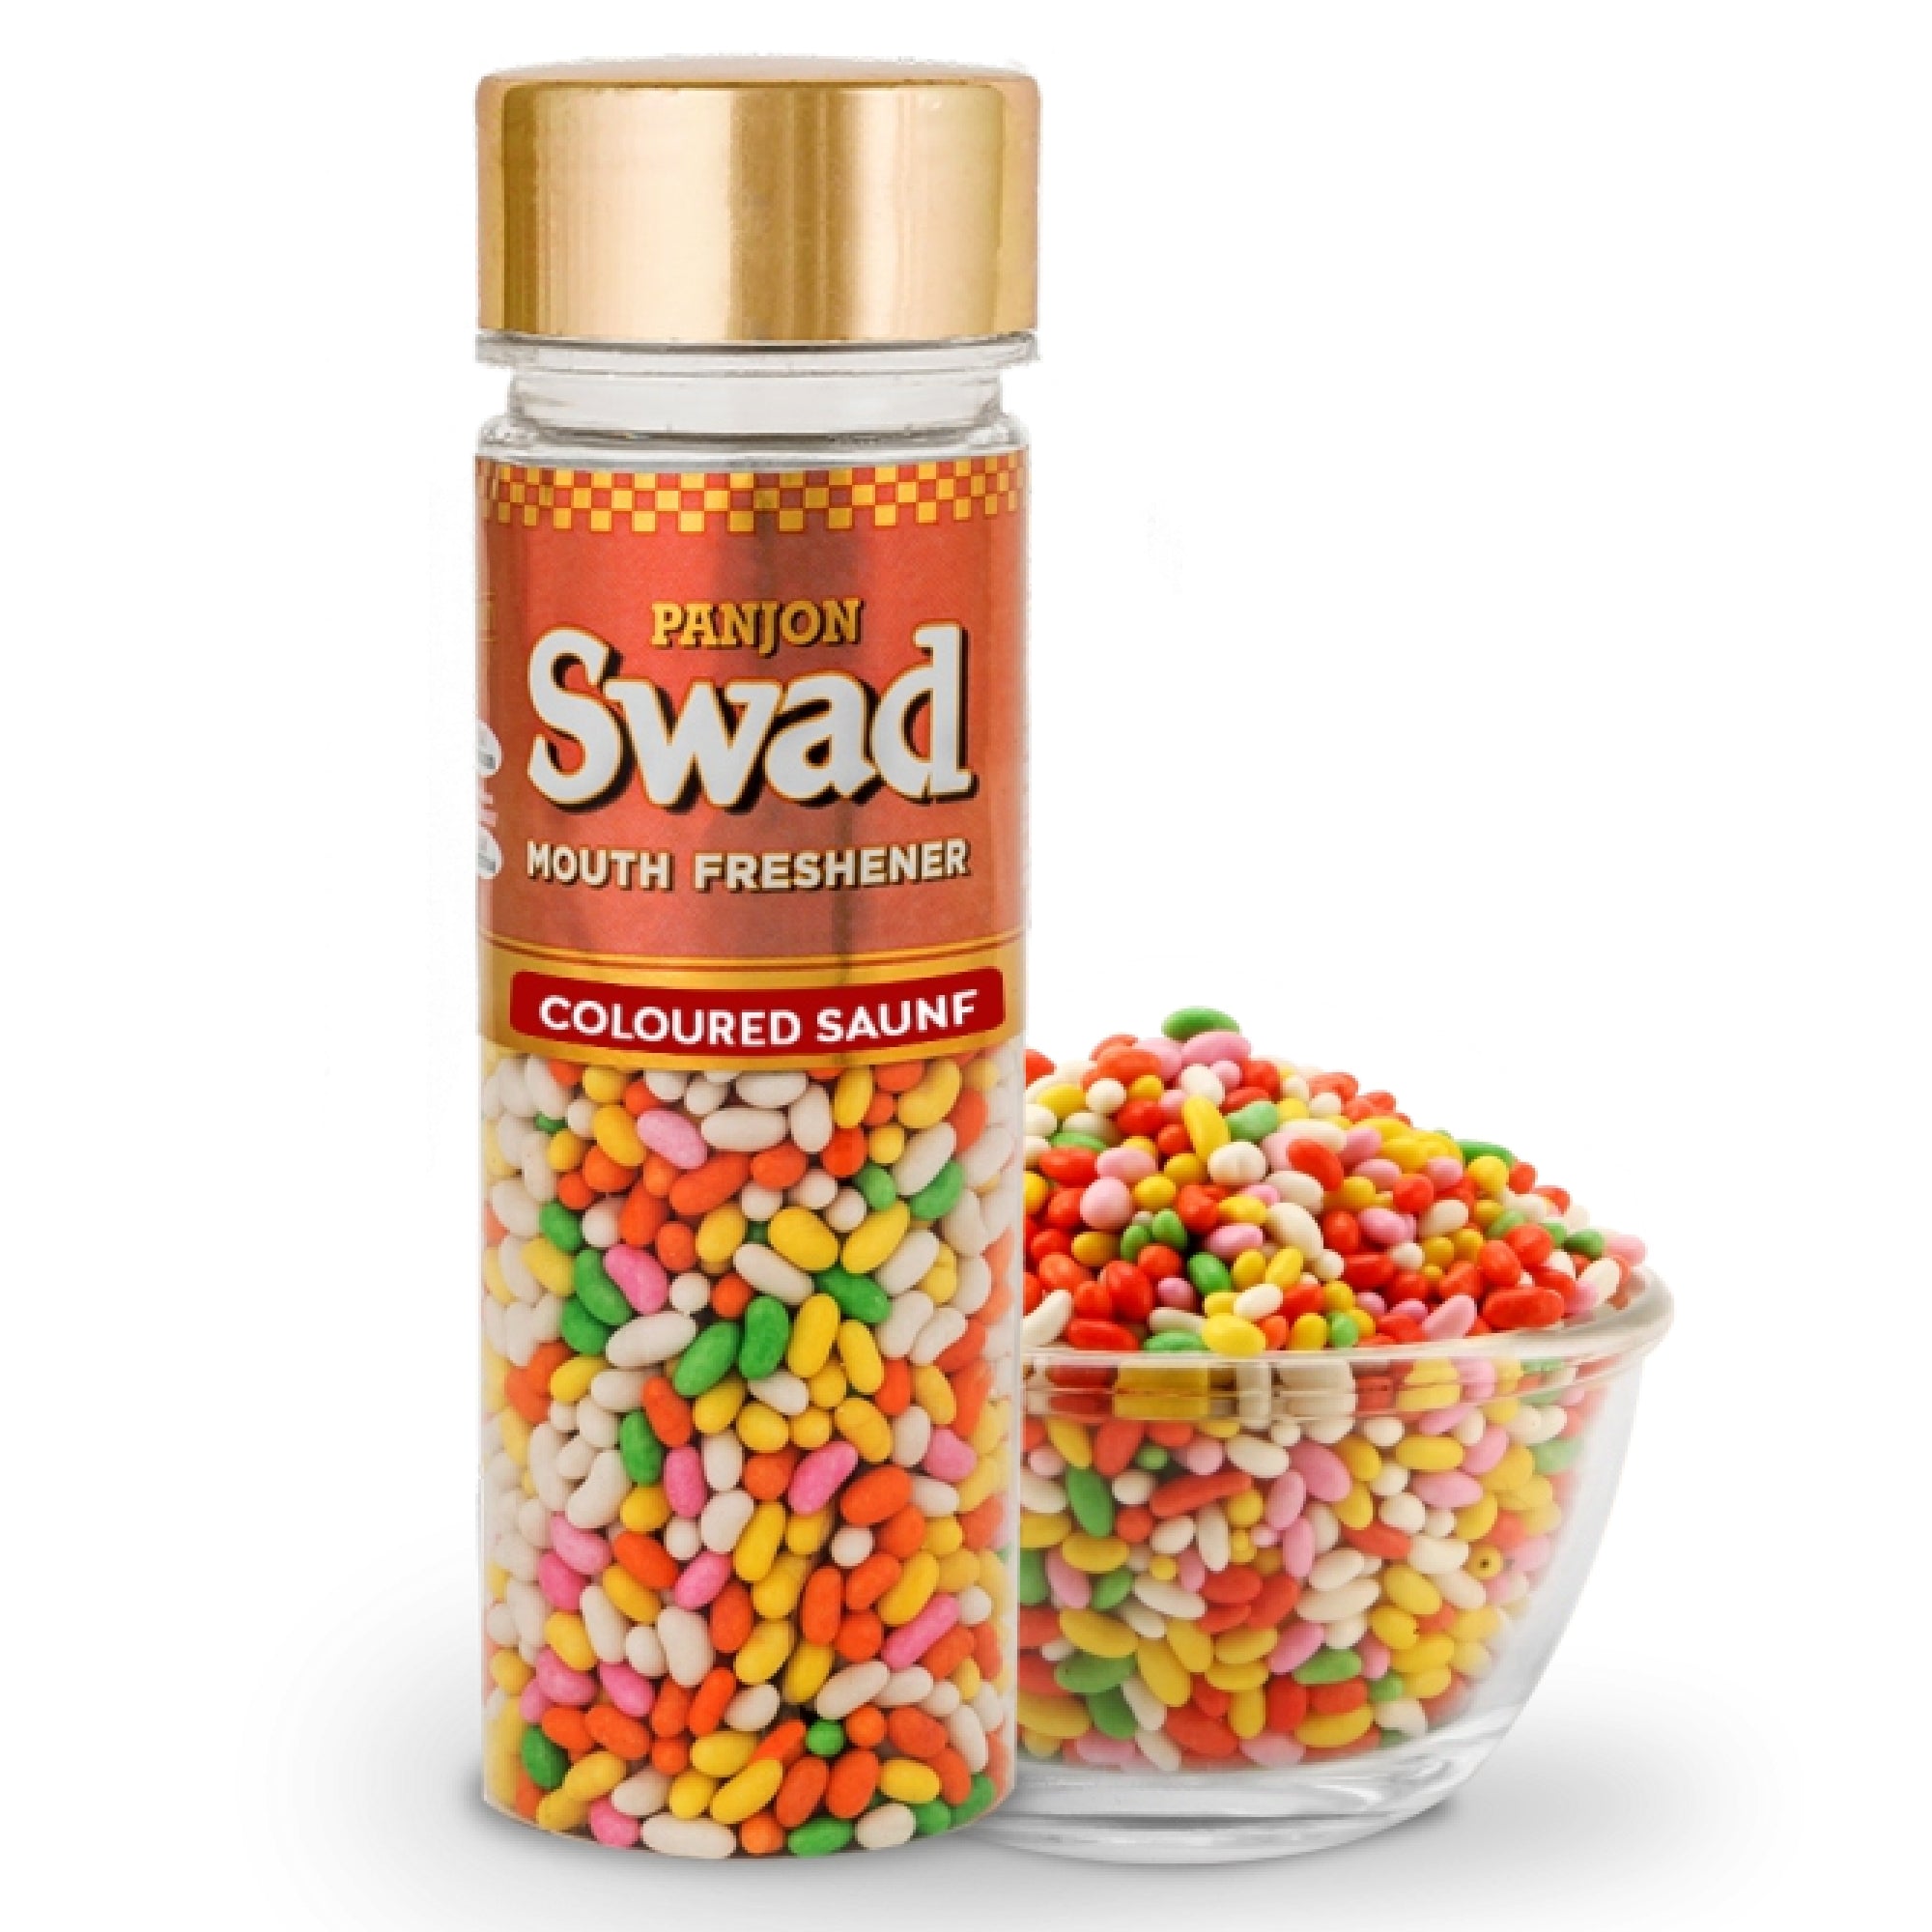 Swad Colored Saunf Mukhwas Mouth Freshener Bottle, 180 g